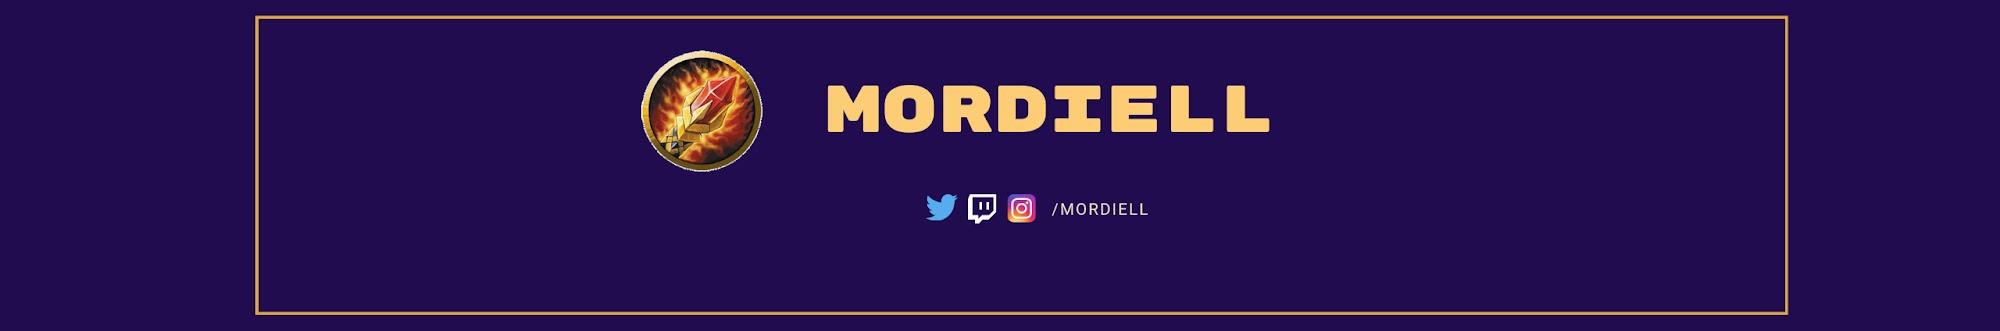 Mordiell